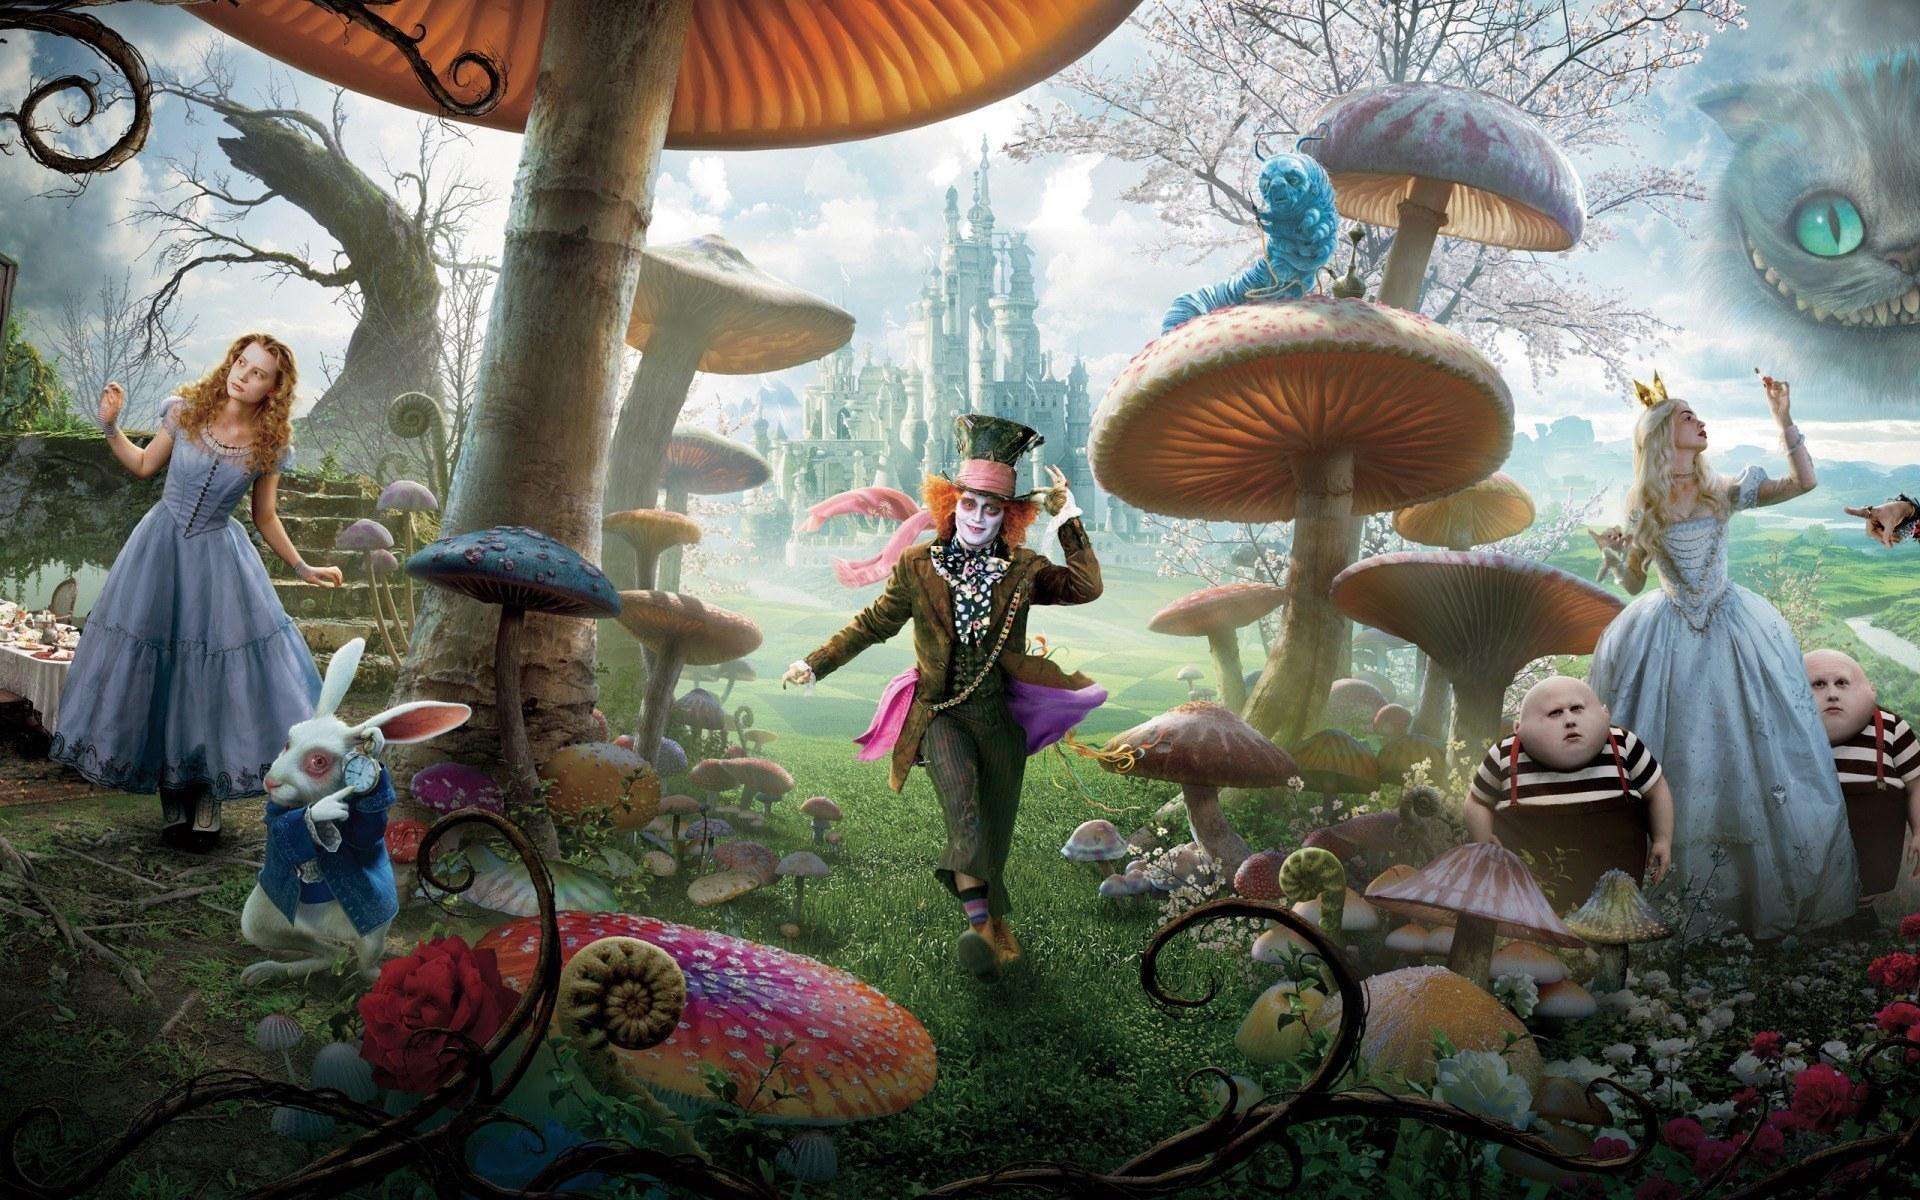 愛麗絲夢遊仙境 Alice in Wonderland by Tim Burton